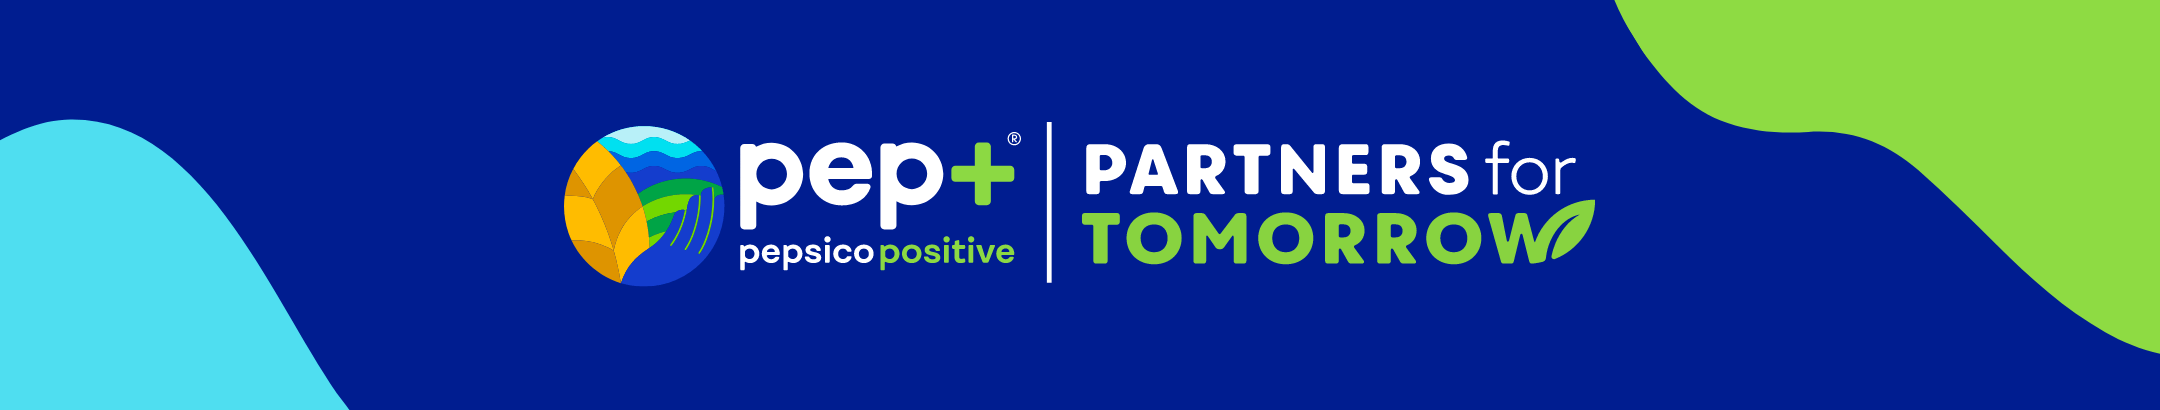 pep+ Pepsico Positive: Partners for Tomorrow